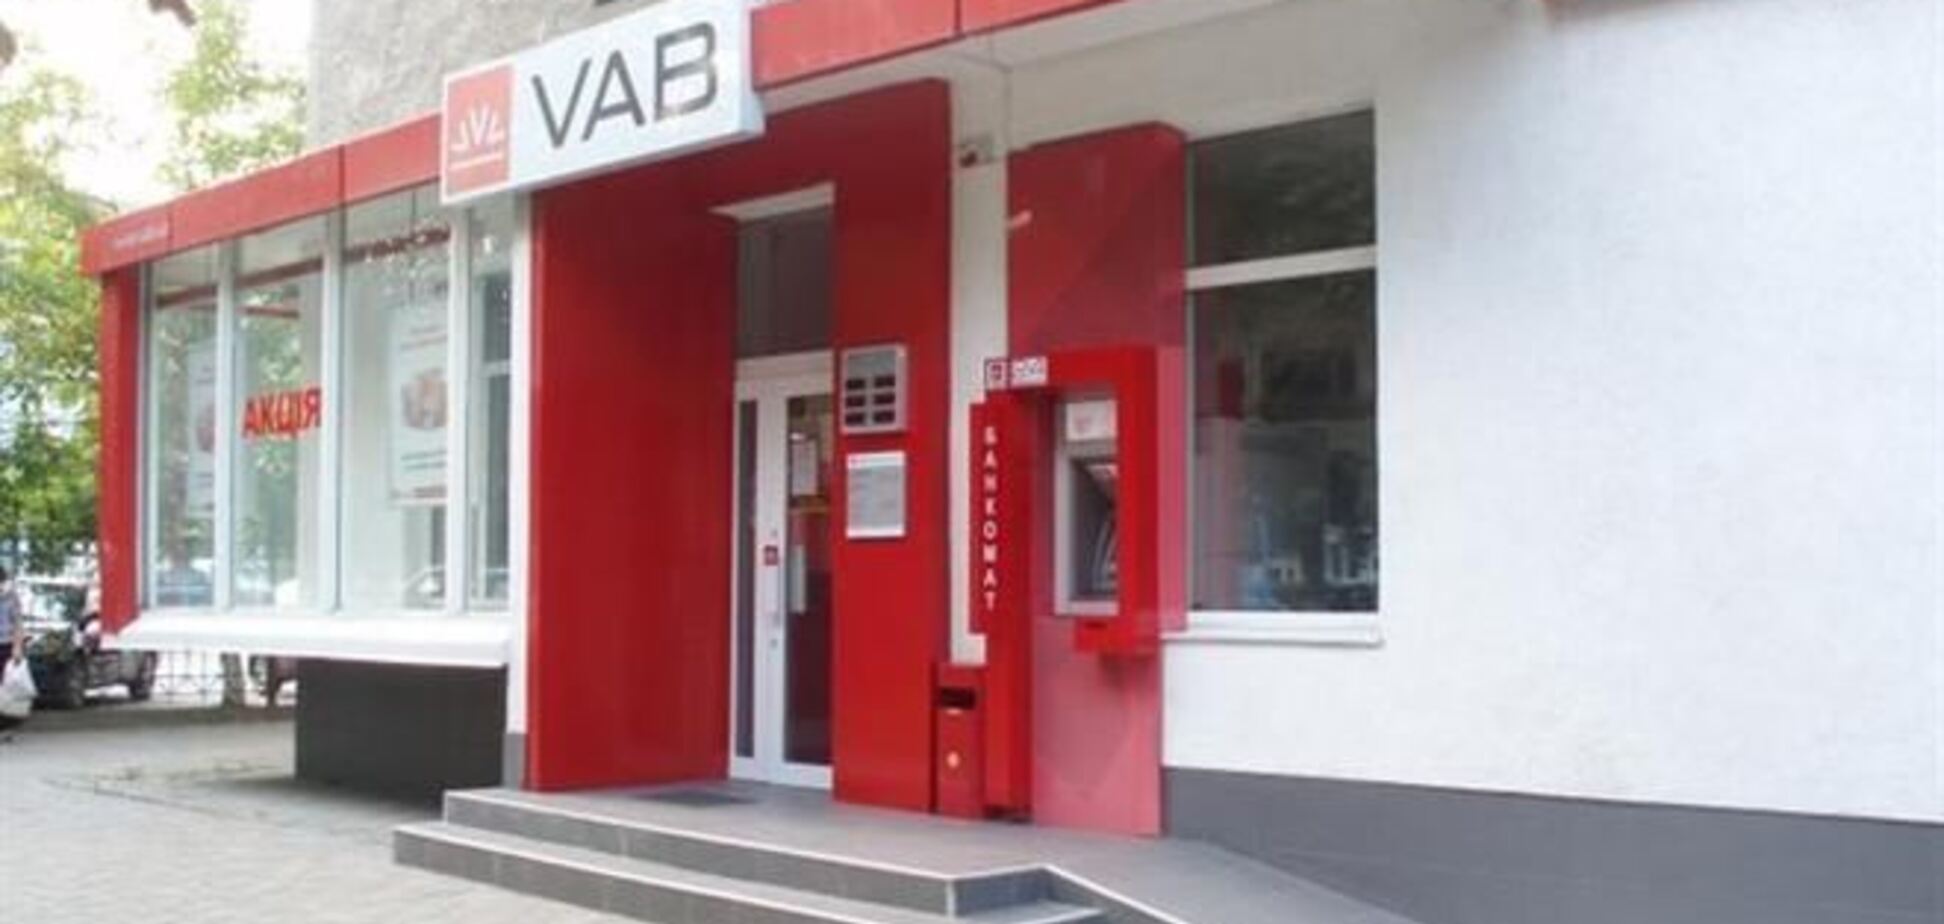 VAB Банк намерен увеличить долю кредитов АПК почти до 70%  корпоративного кредитного портфеля в 2014 году